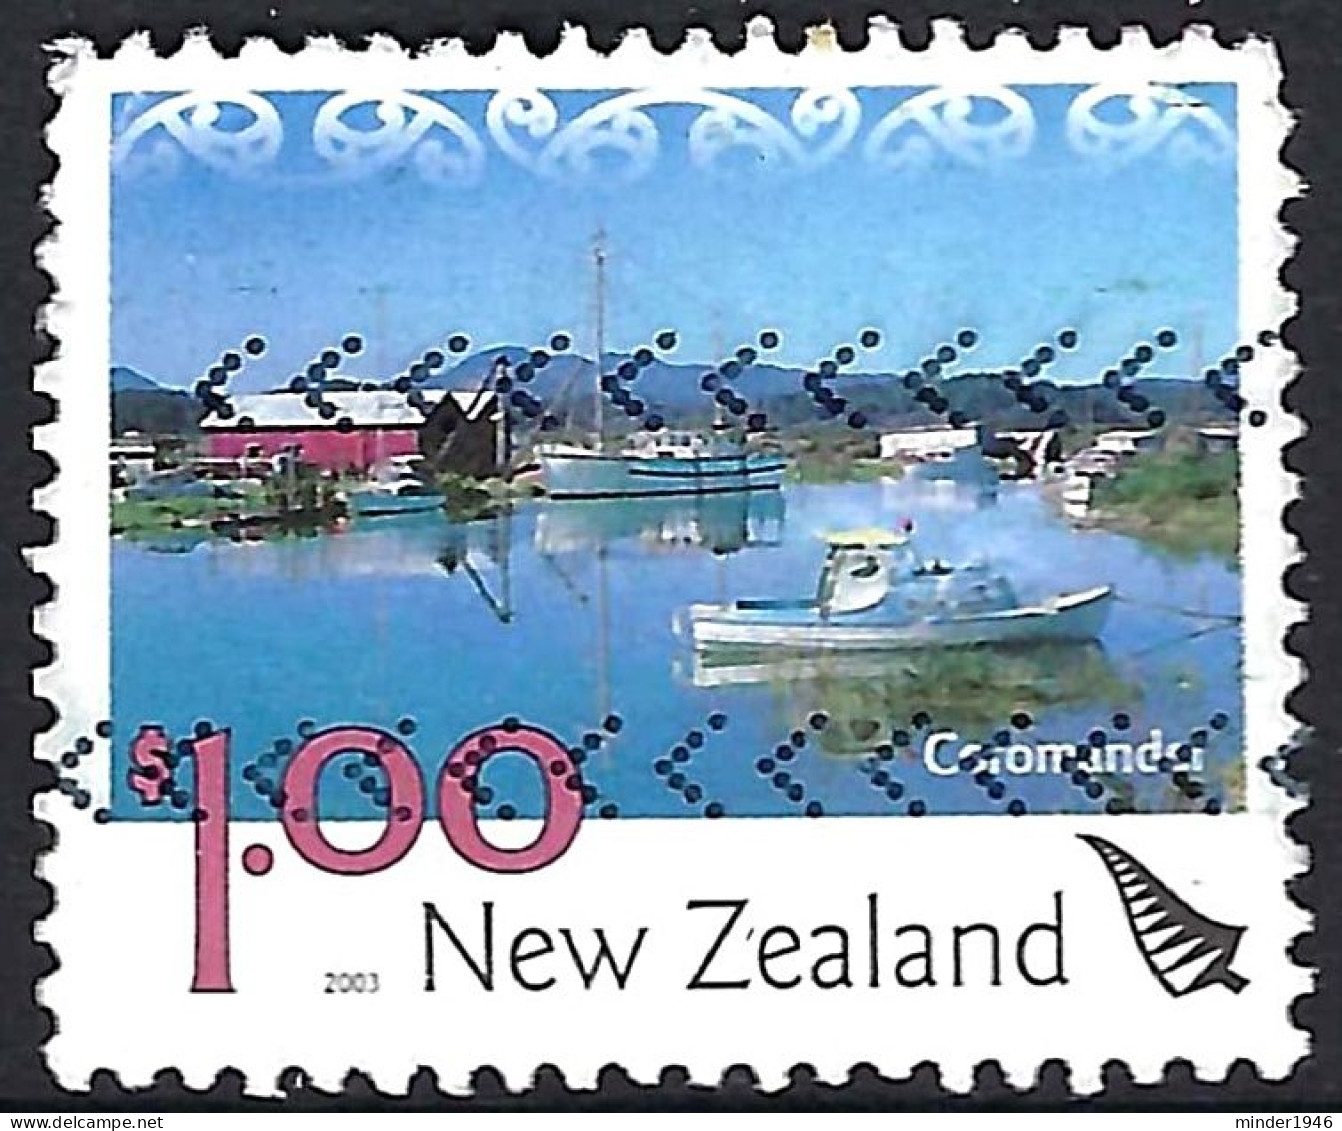 NEW ZEALAND 2003 QEII $1 Multicoloured, Scenery-Coromandel FU - Oblitérés